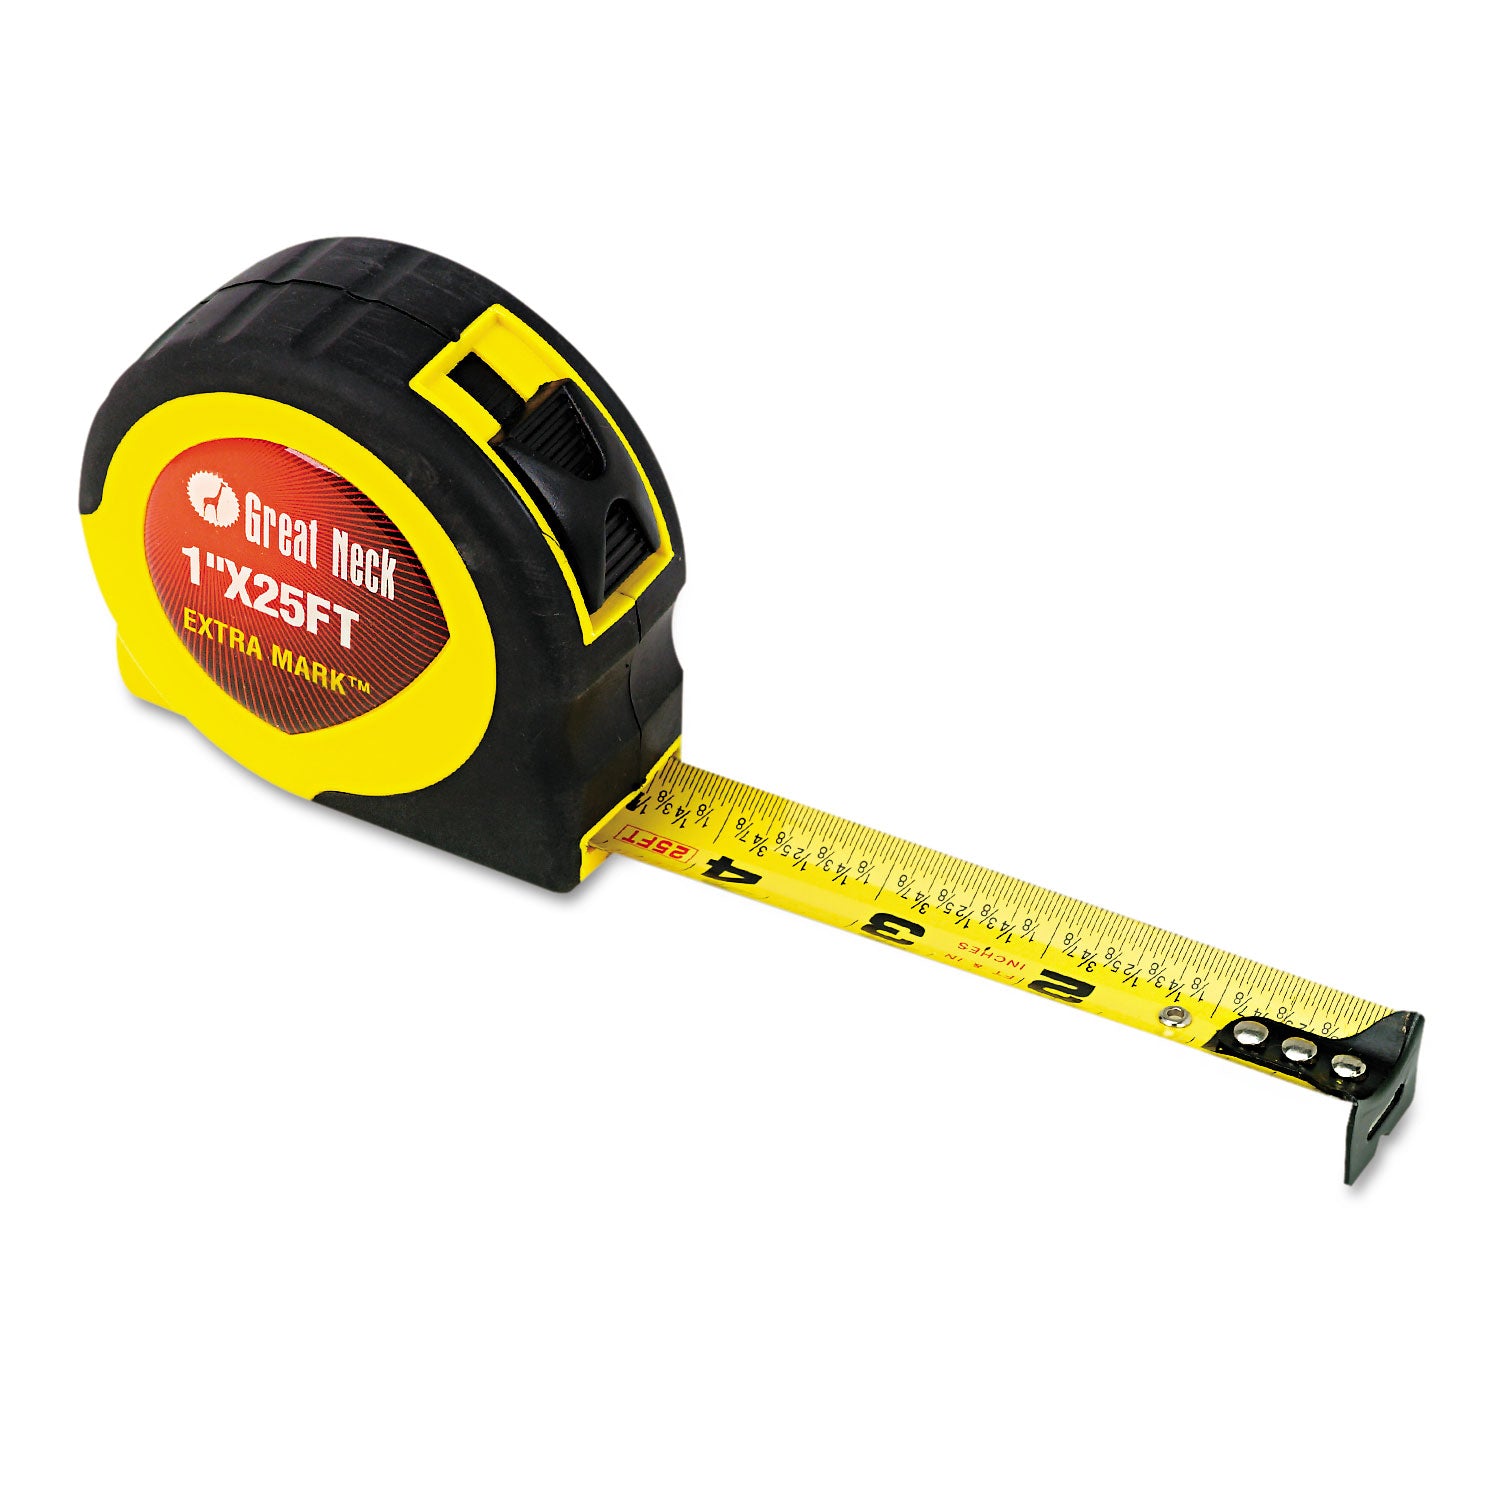 ExtraMark Power Tape, 1" x 25 ft, Steel, Yellow/Black - 